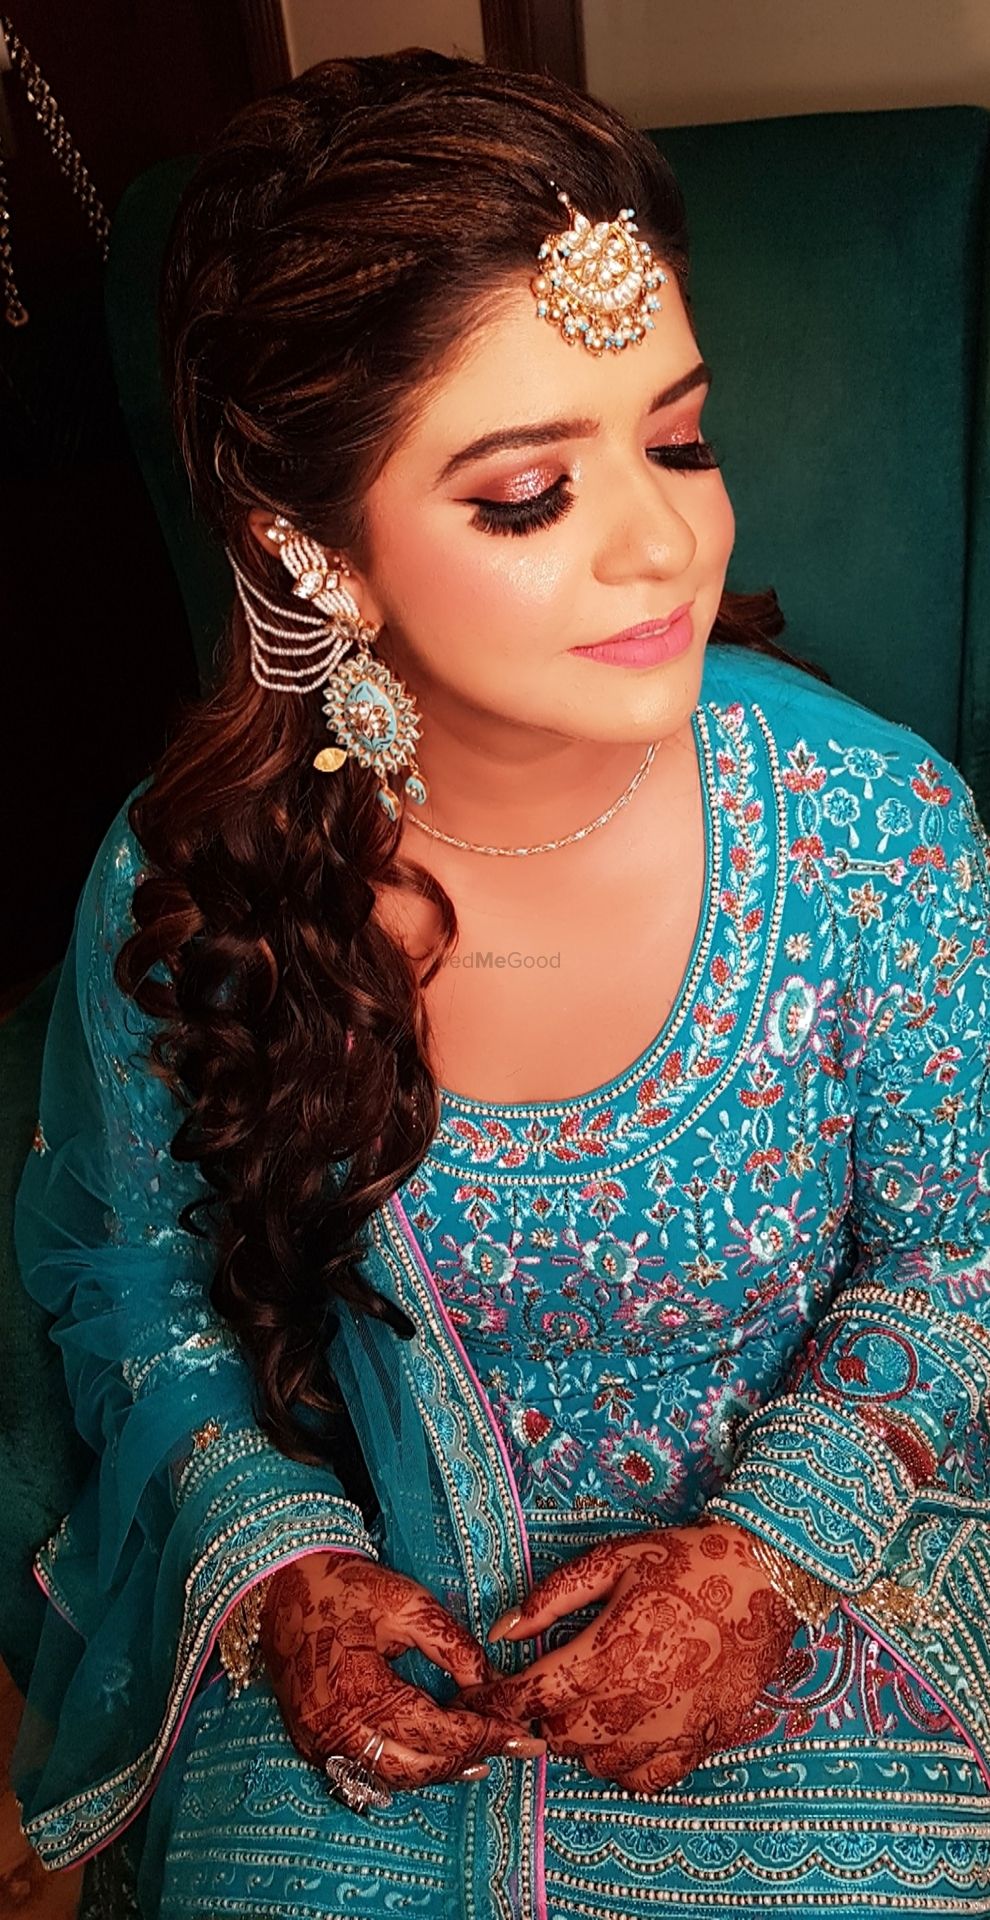 Photo From makeup stories 2018 - By Priya Chopra Makeup Artistry